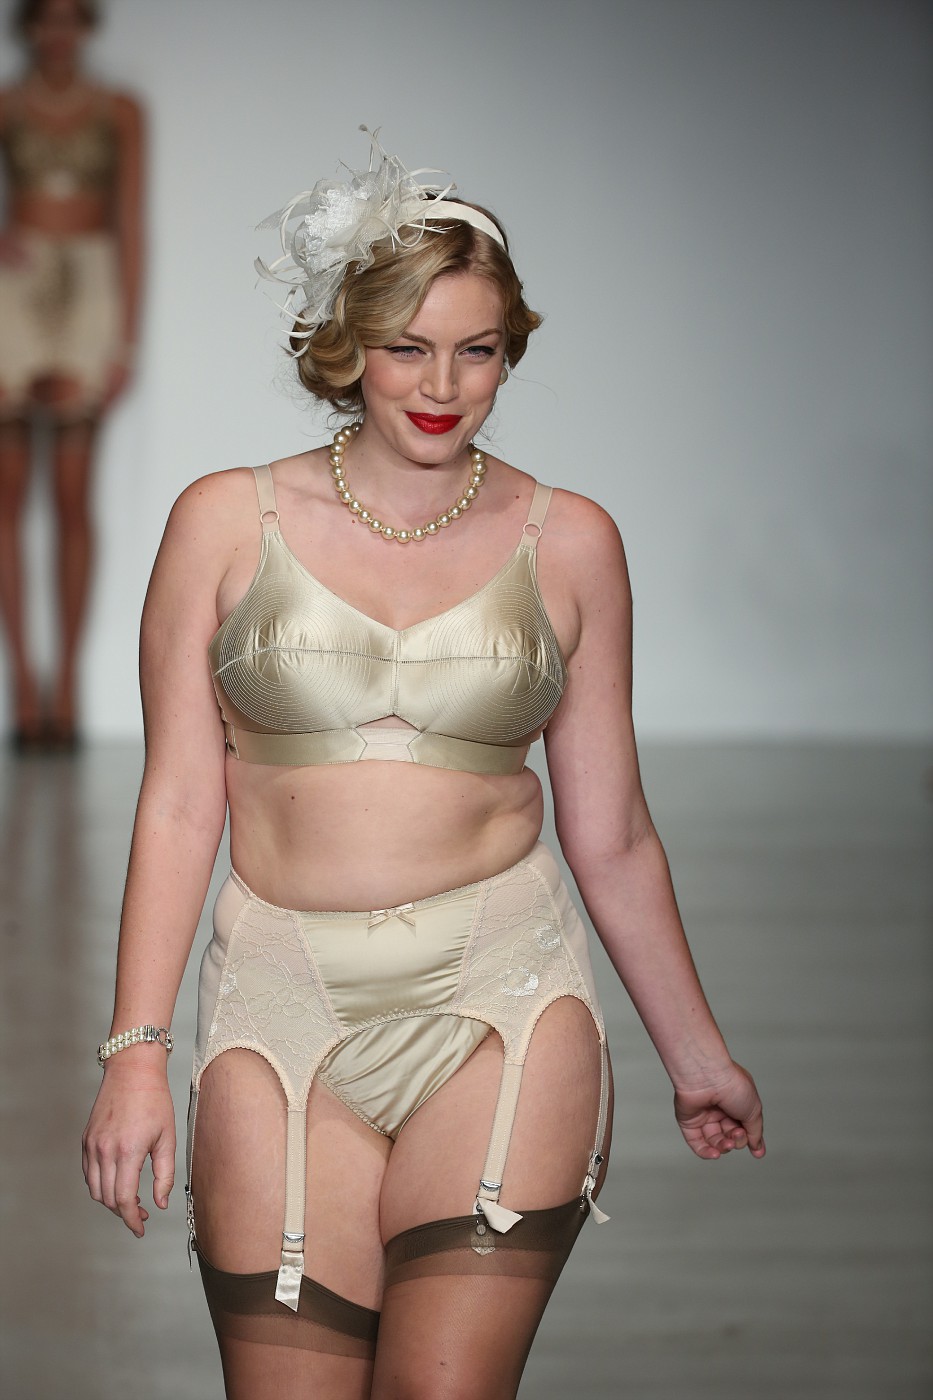 NEW YORK, NY - OCTOBER 24: A model walks runway wearing Secrets in Lace lin...